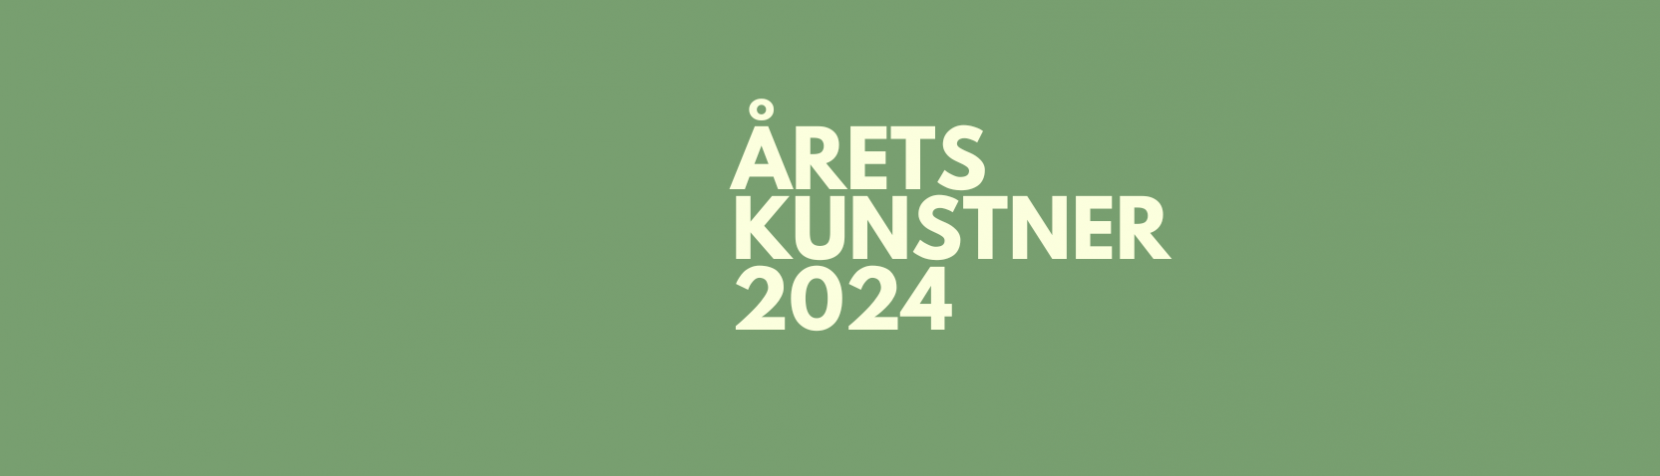 Årets kunstner 2024